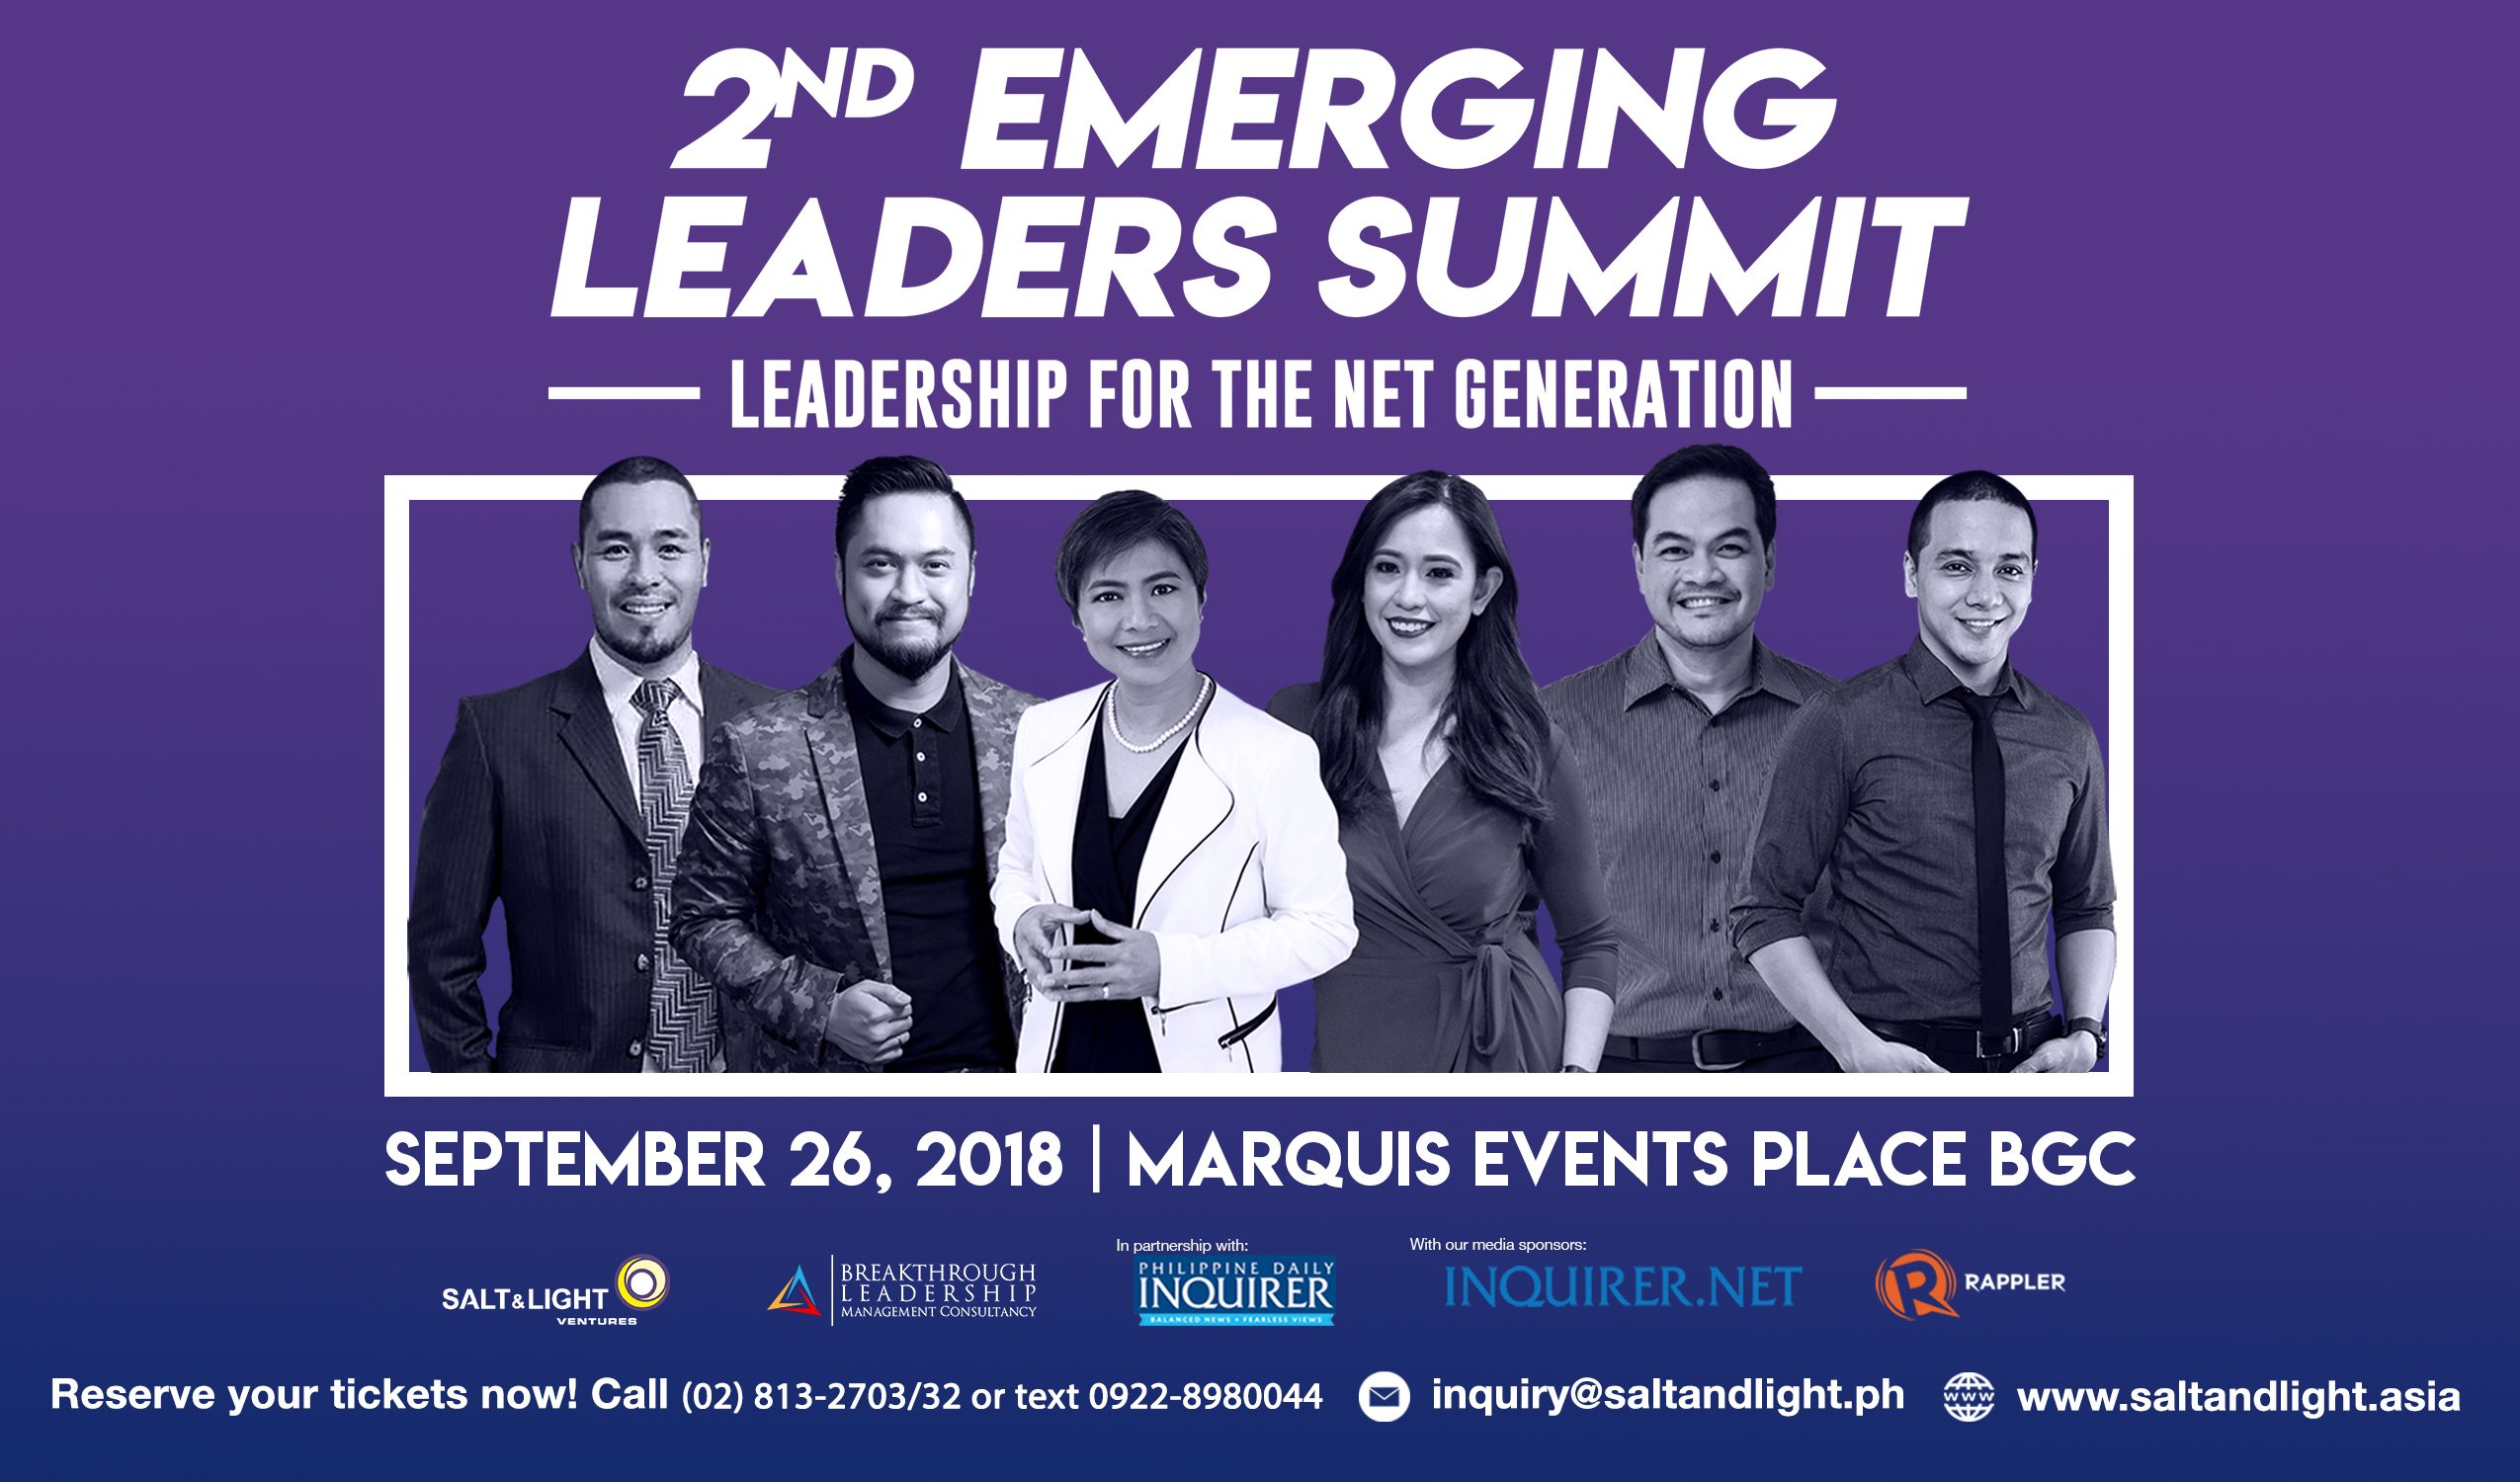 Emerging Leadership Summit 2018: Learn from leaders of the digital generation